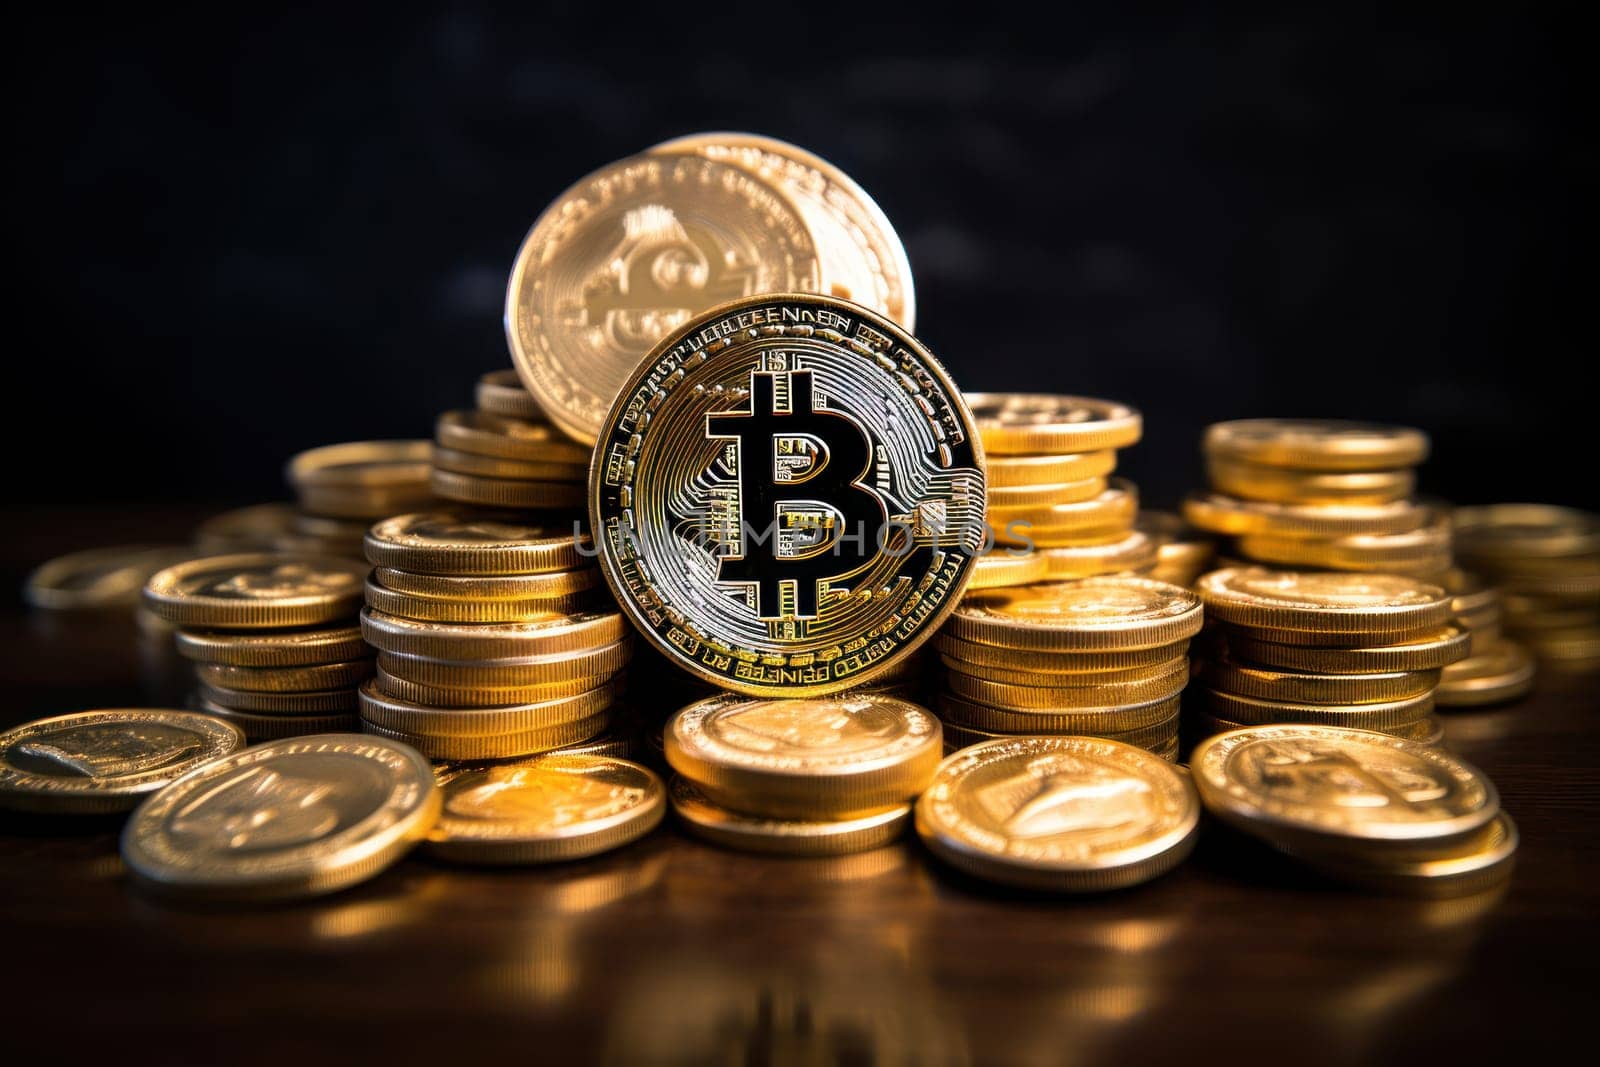 billionaire man get bitcoin coin for shopping. generative AI.